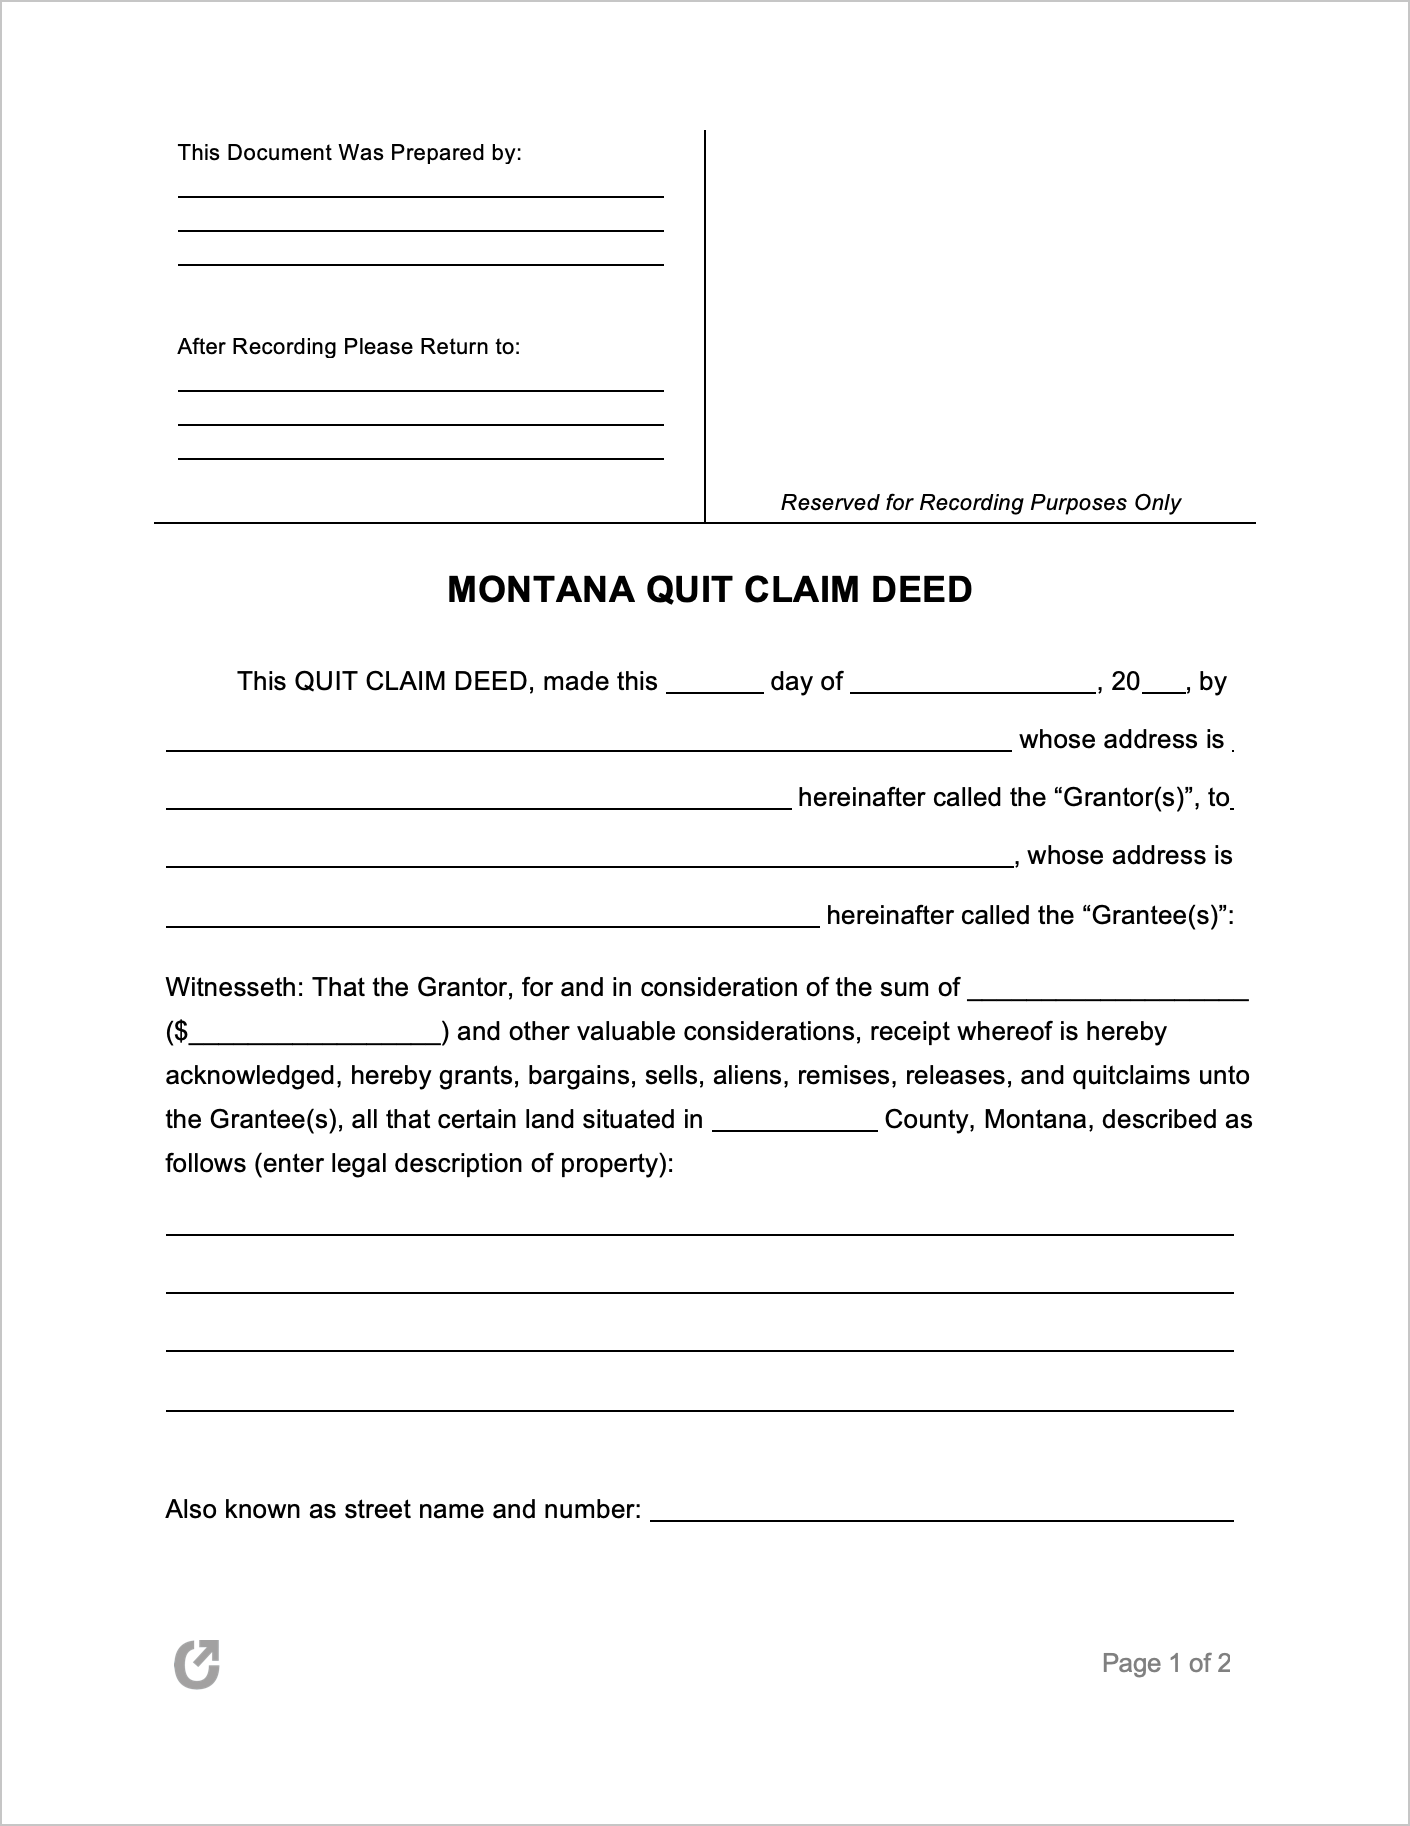 free-montana-quit-claim-deed-form-pdf-word